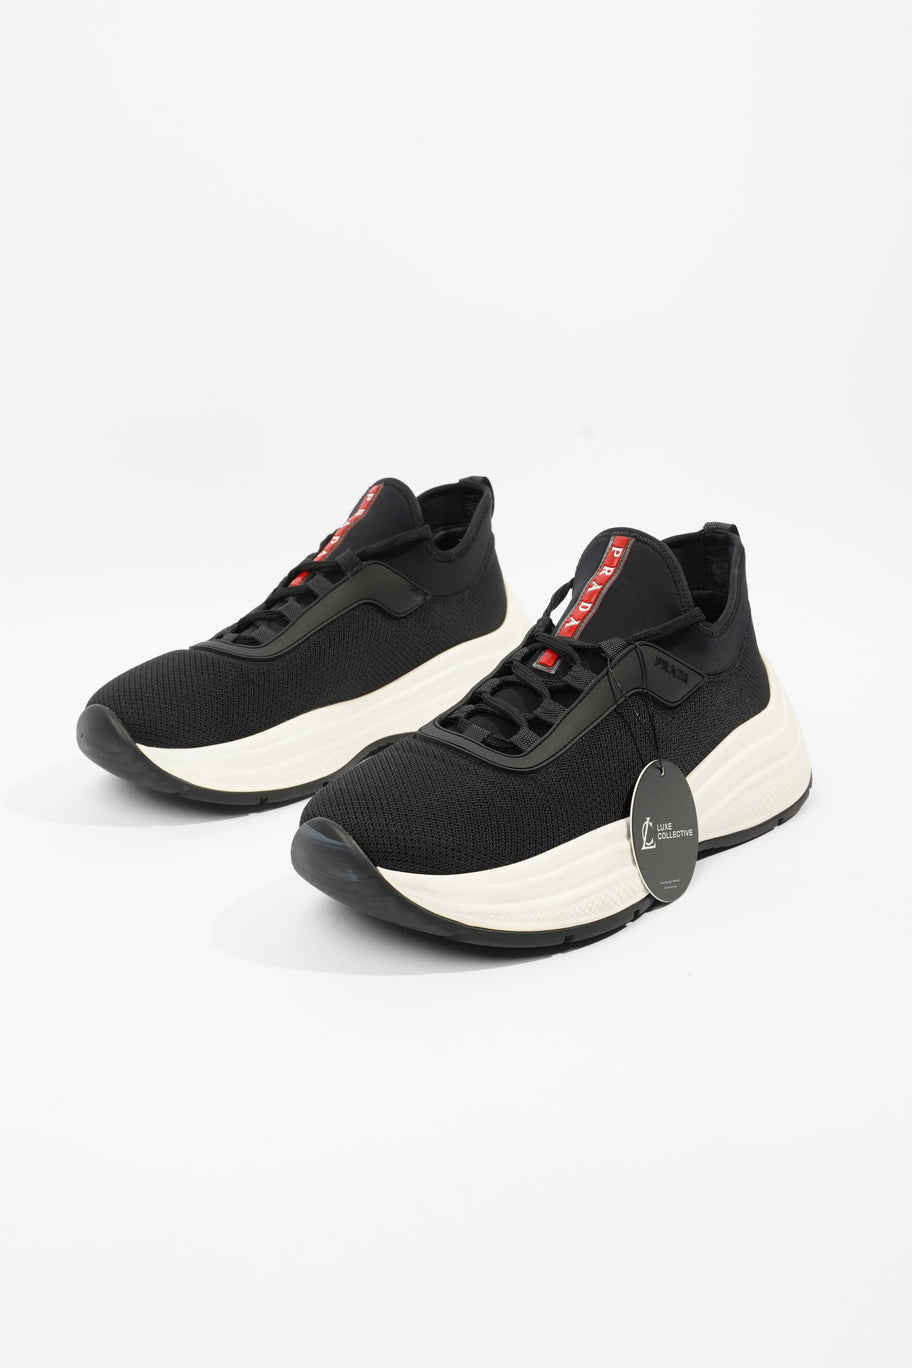 Neoprene Sneakers Black / Red Technical Fabric EU 40 UK 6 Image 12